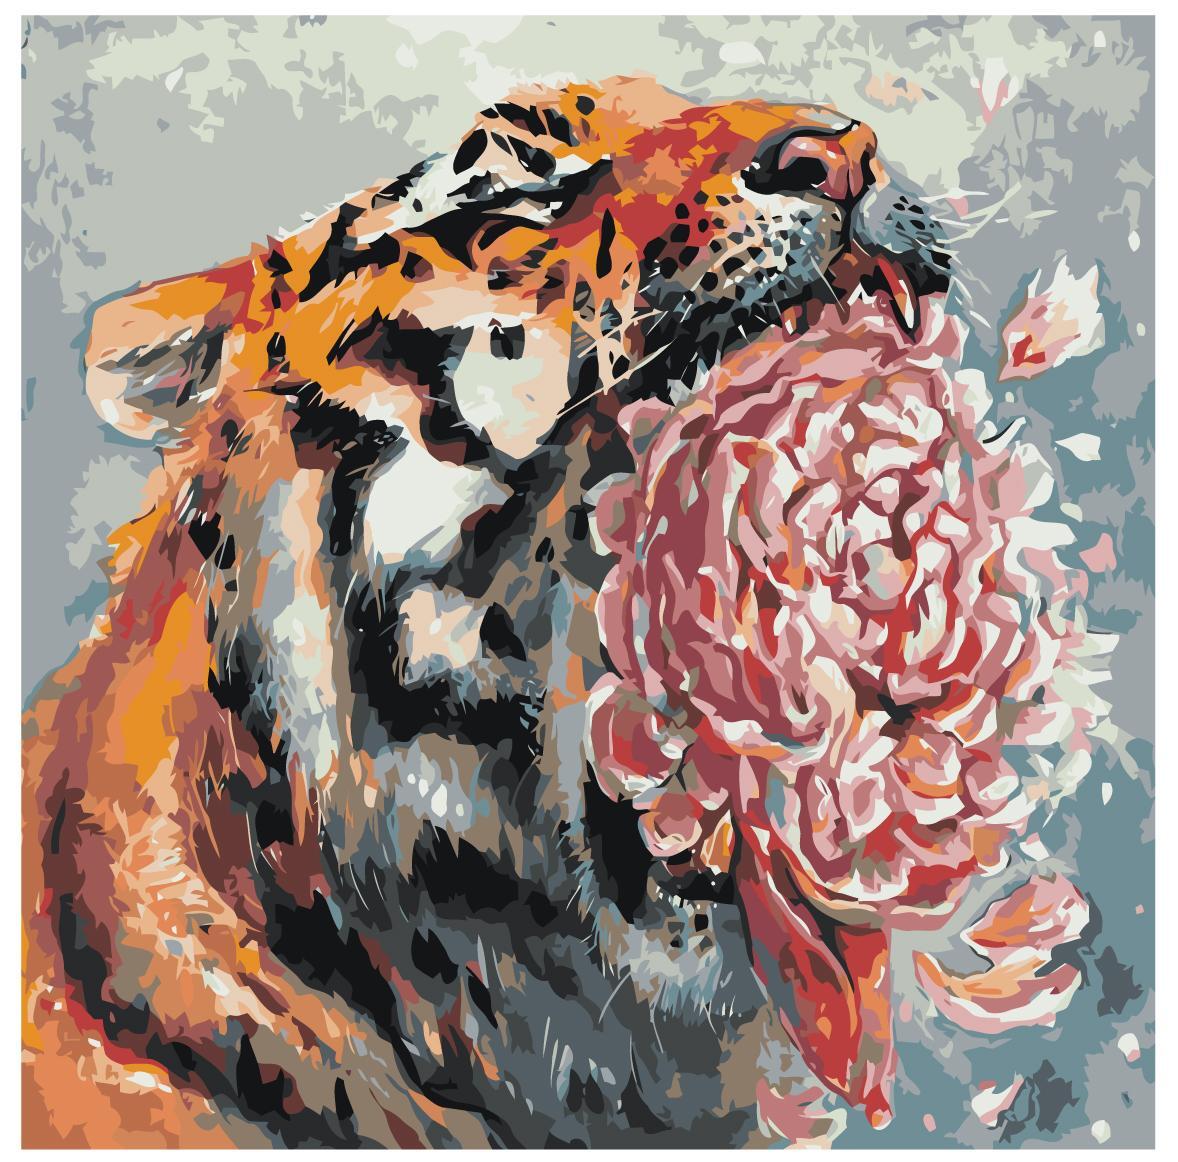 Тигрица в цветах